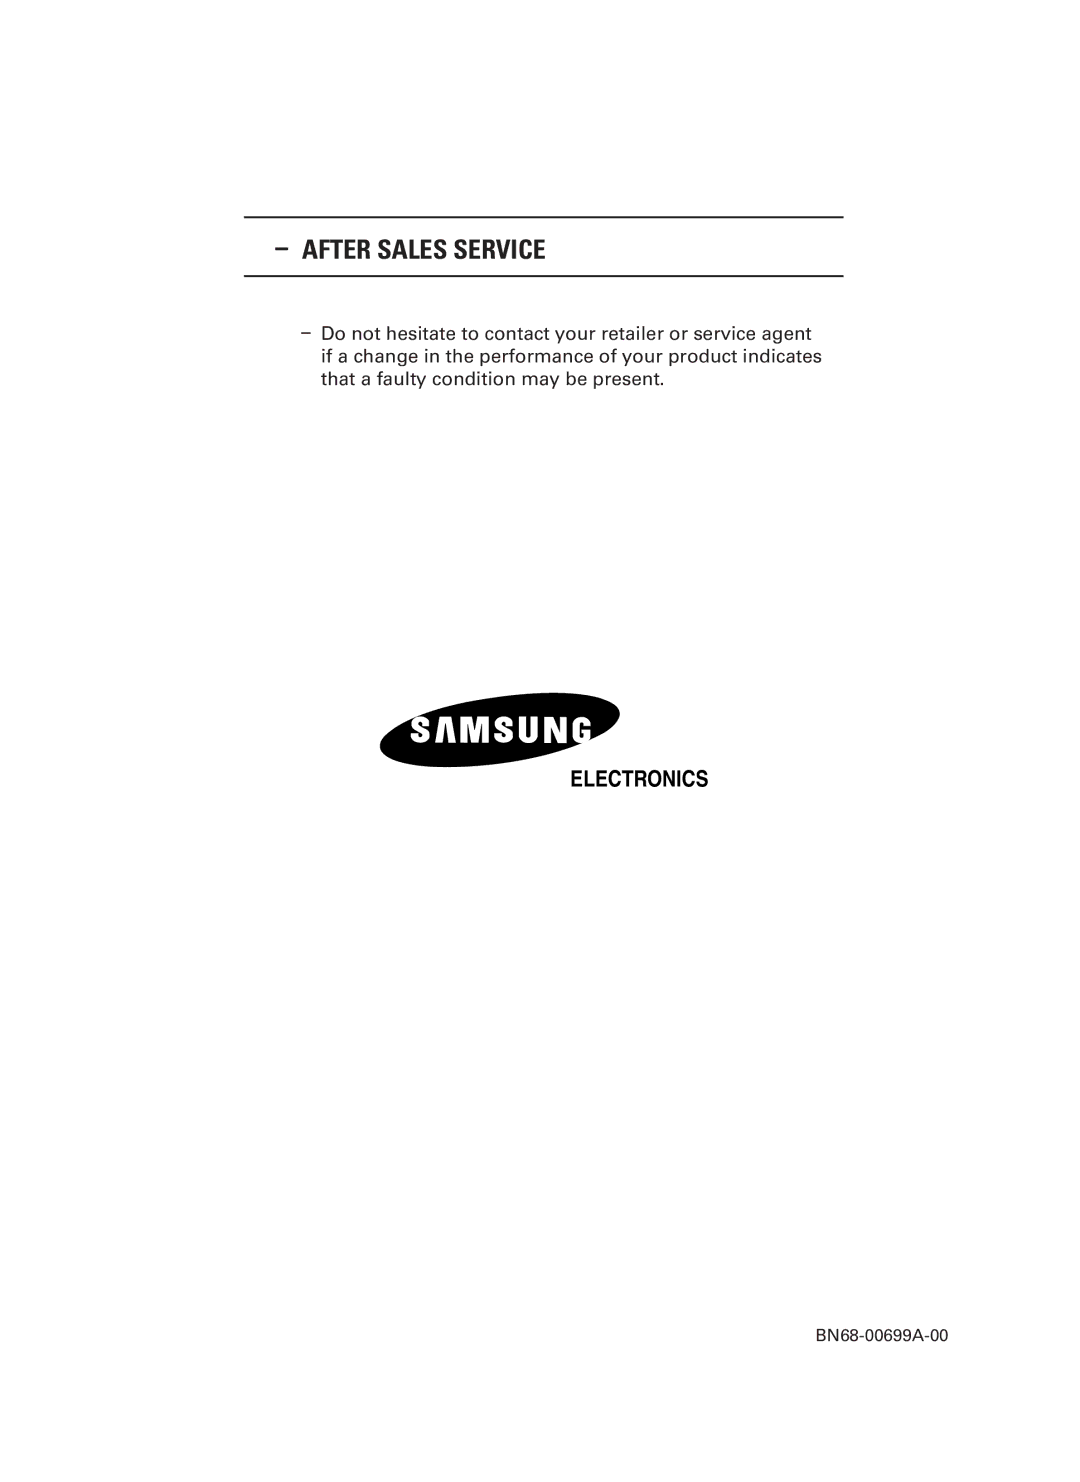 Samsung PAL60 manual After Sales Service 